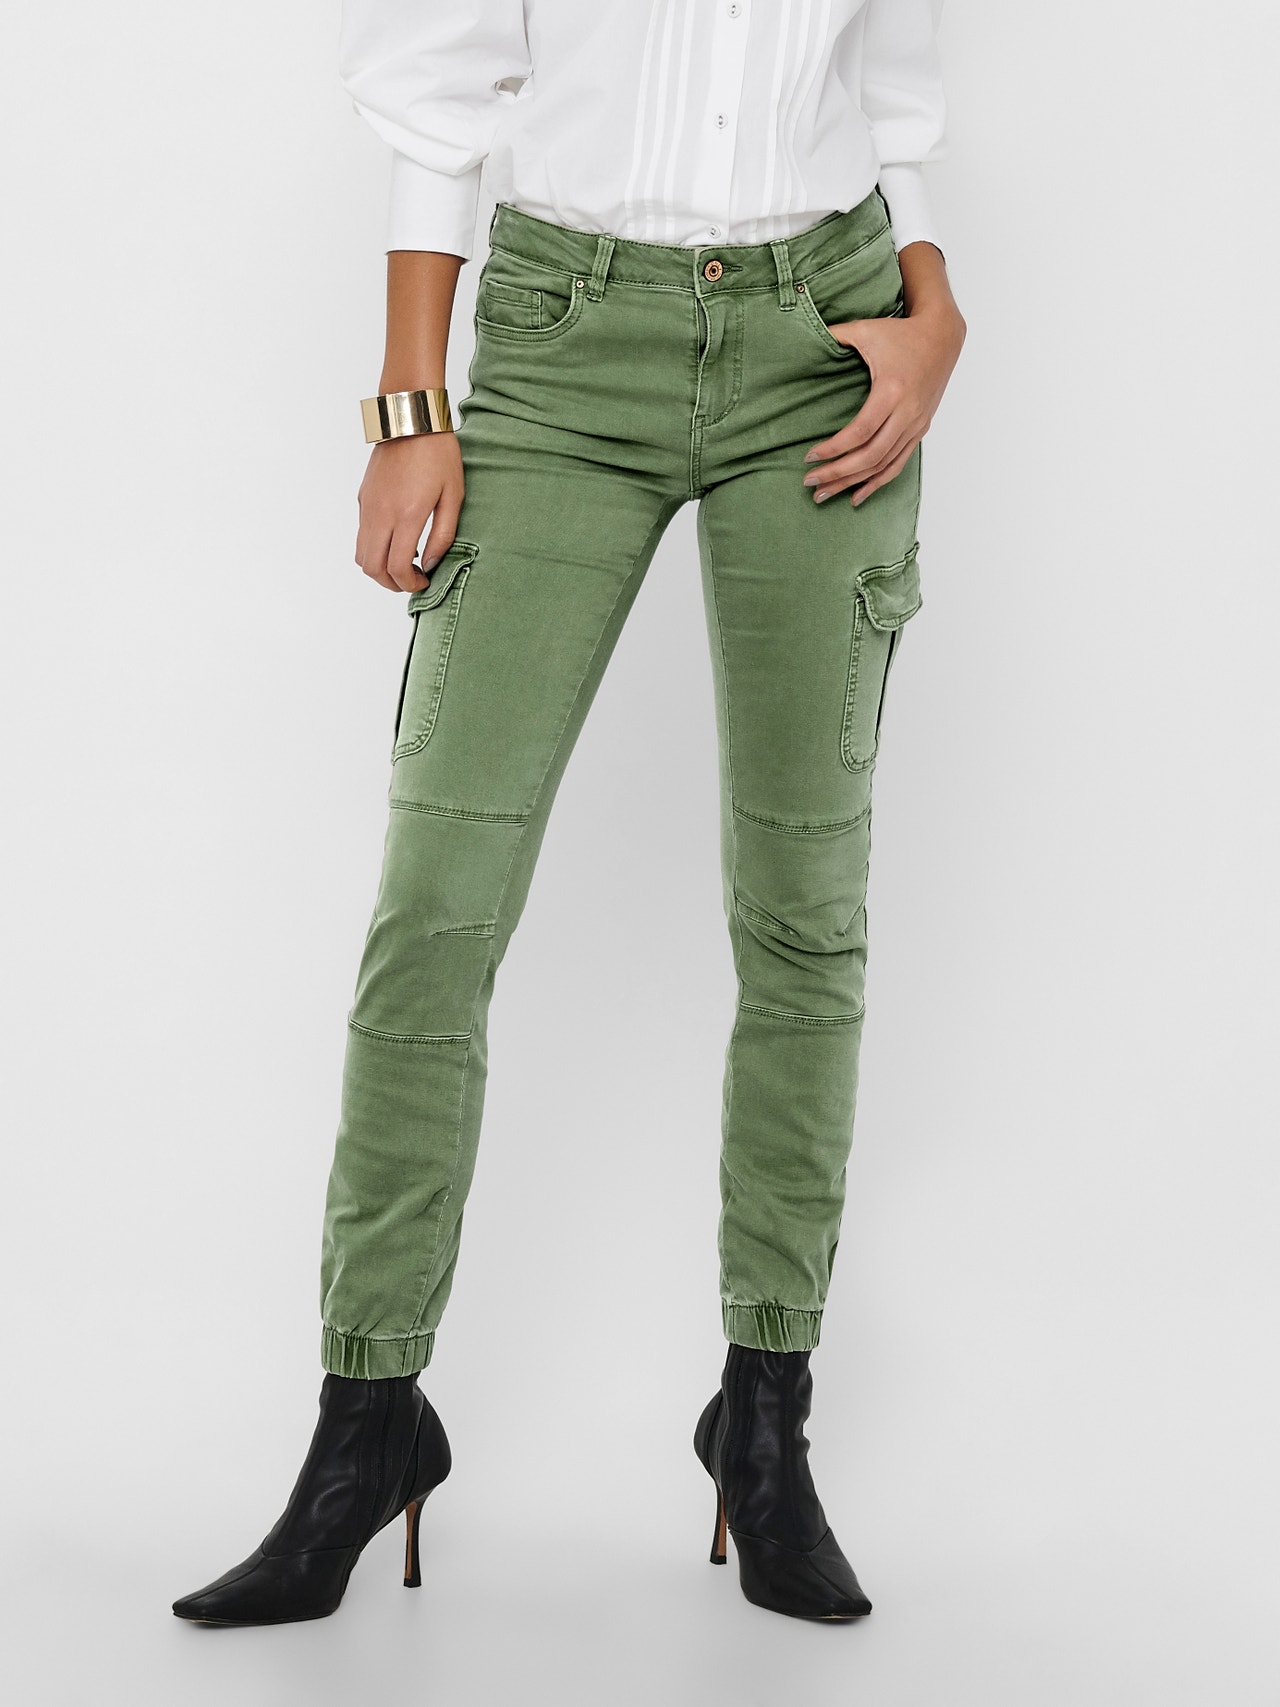 Custom High Waisted Stretch Slim Fit Army Green Sport Cargo Pants